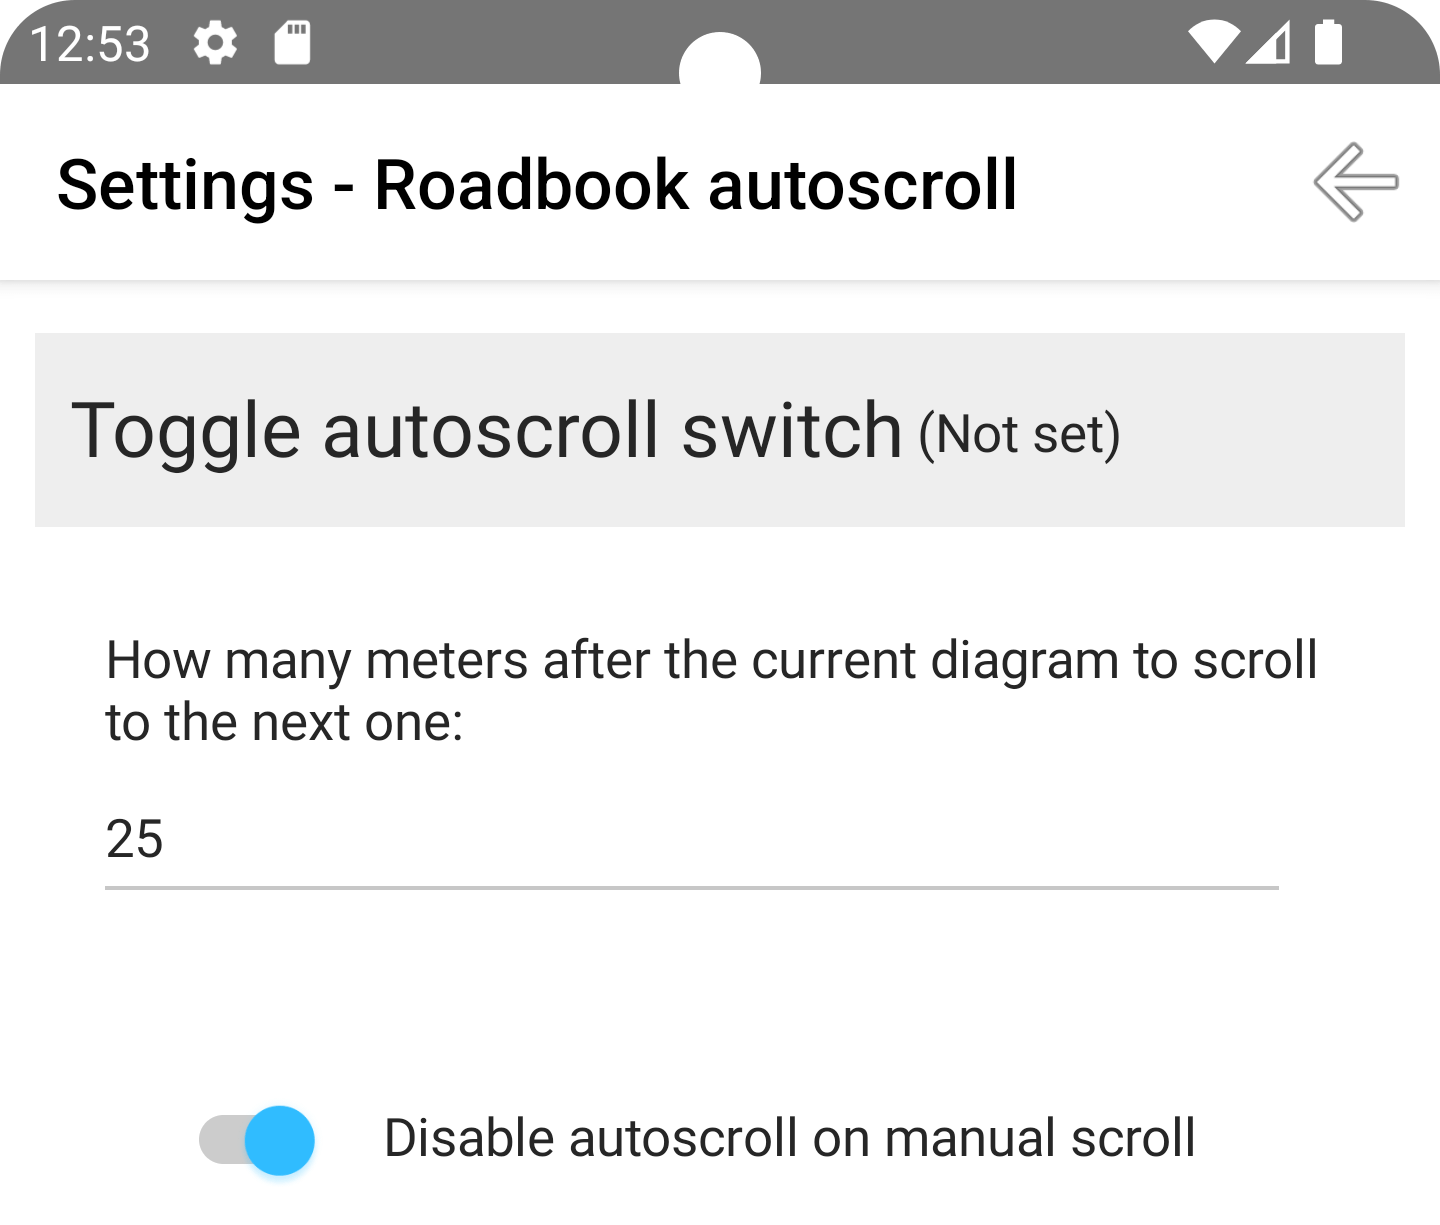 RBR Roadbook Reader autoscroll feature